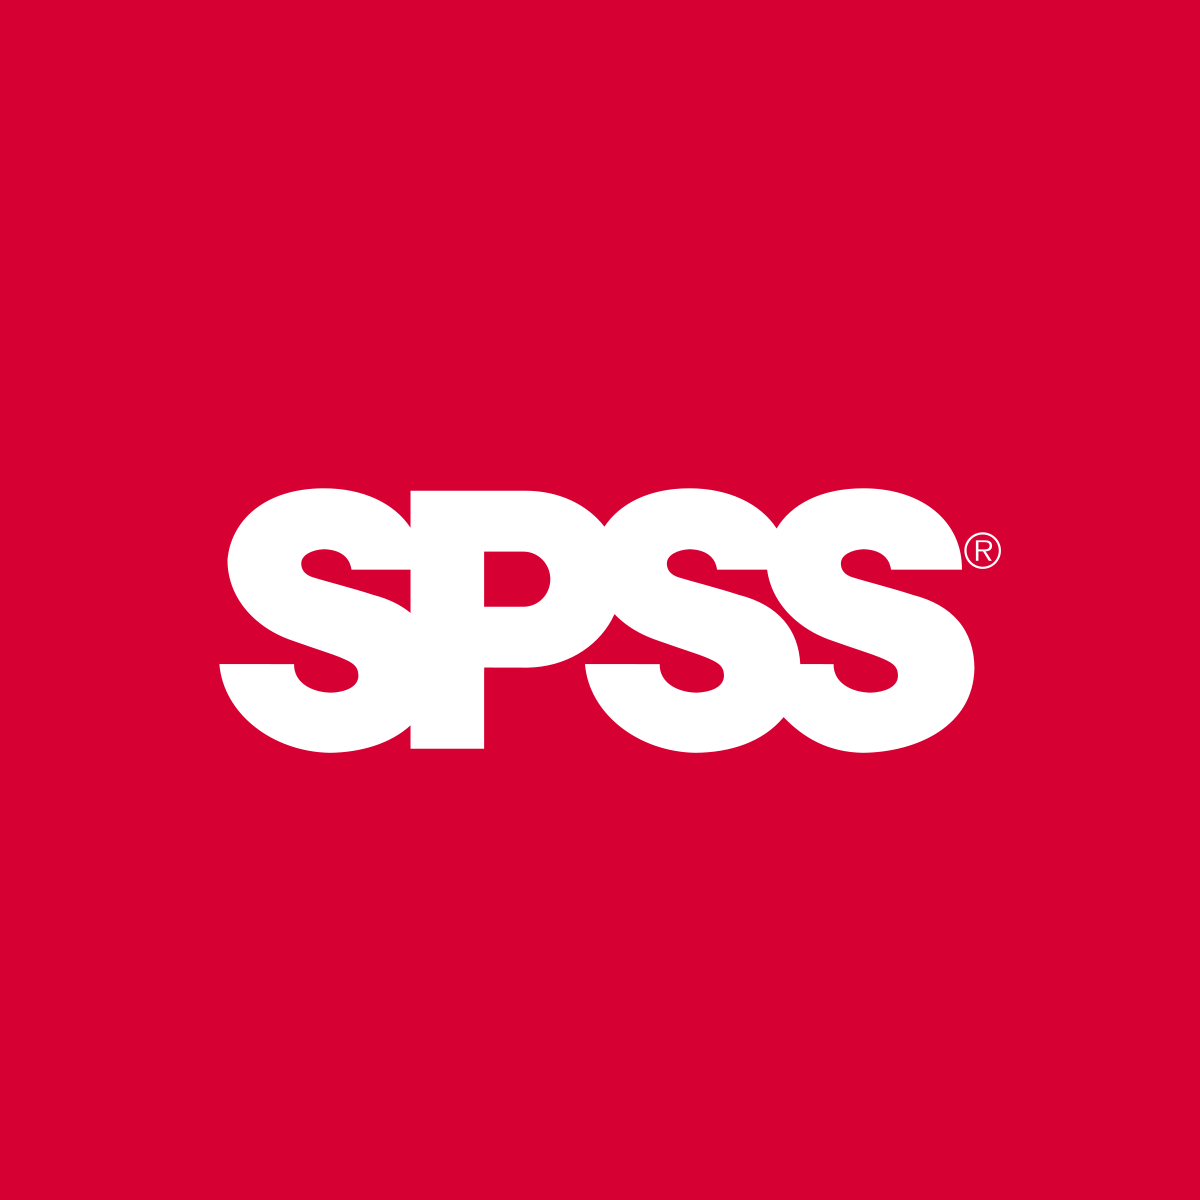 Apa itu SPSS?